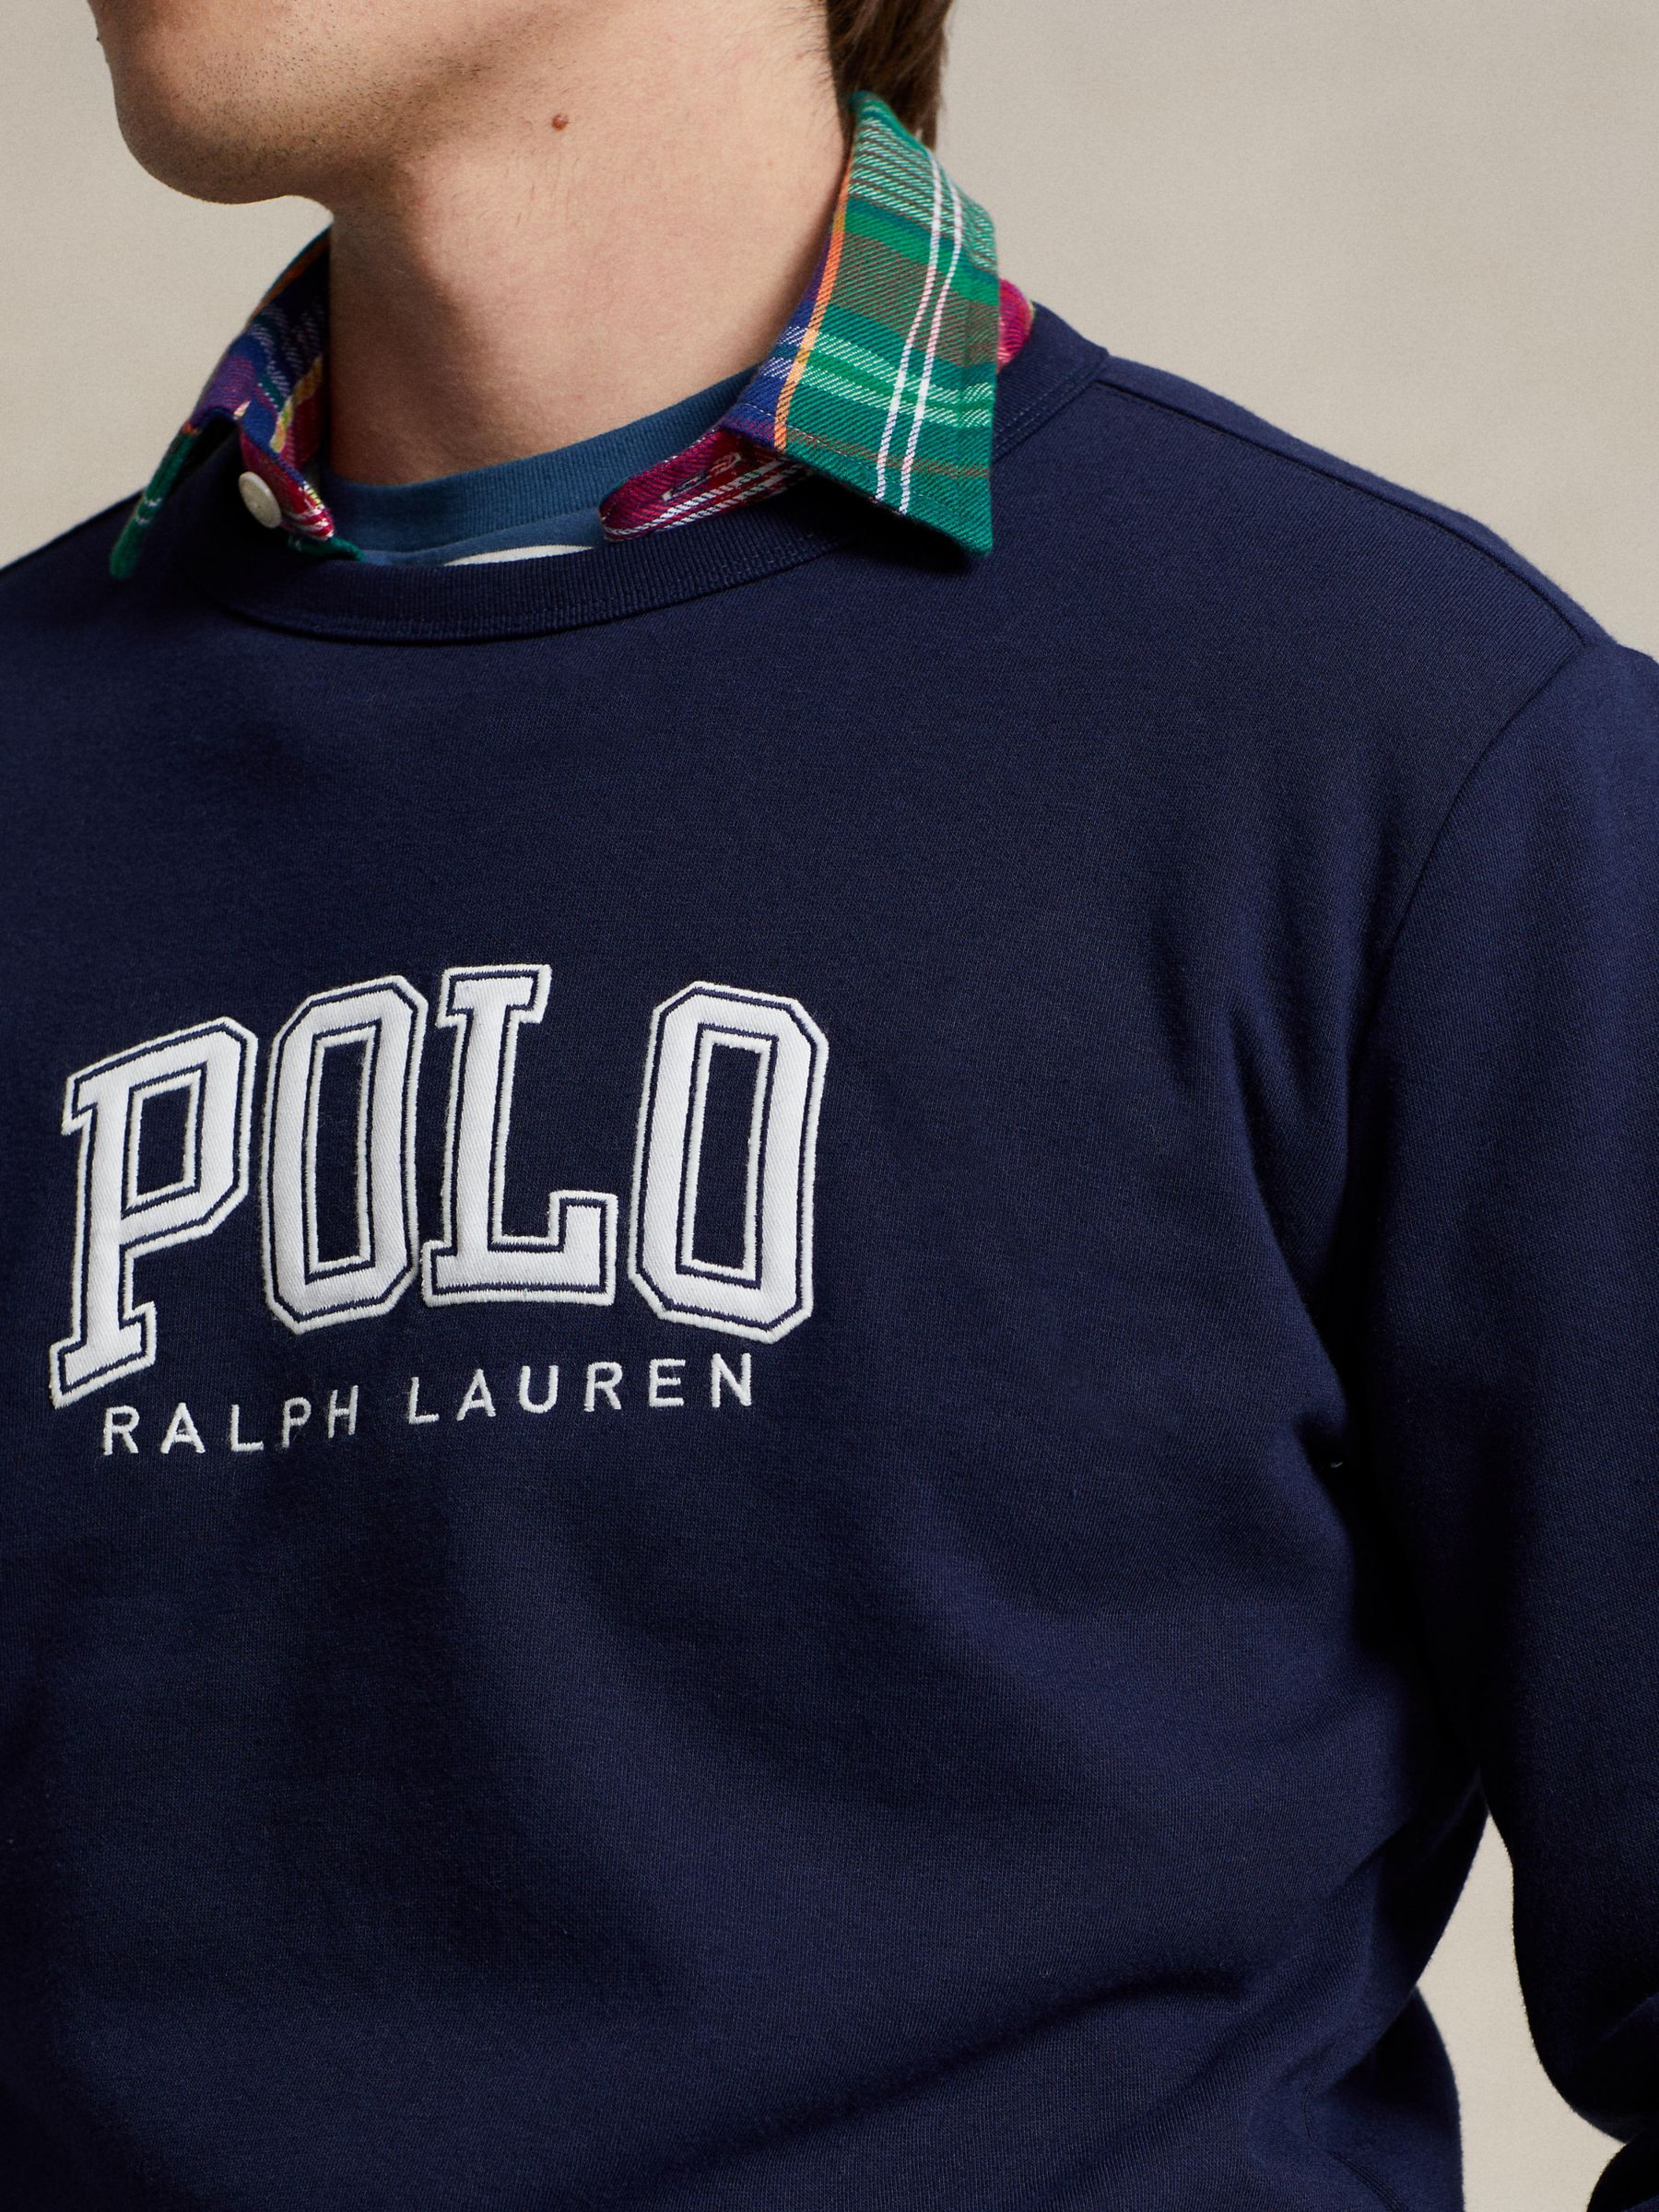 Ralph Lauren Polo Logo Embroidered Sweatshirt, Cruise Navy, S